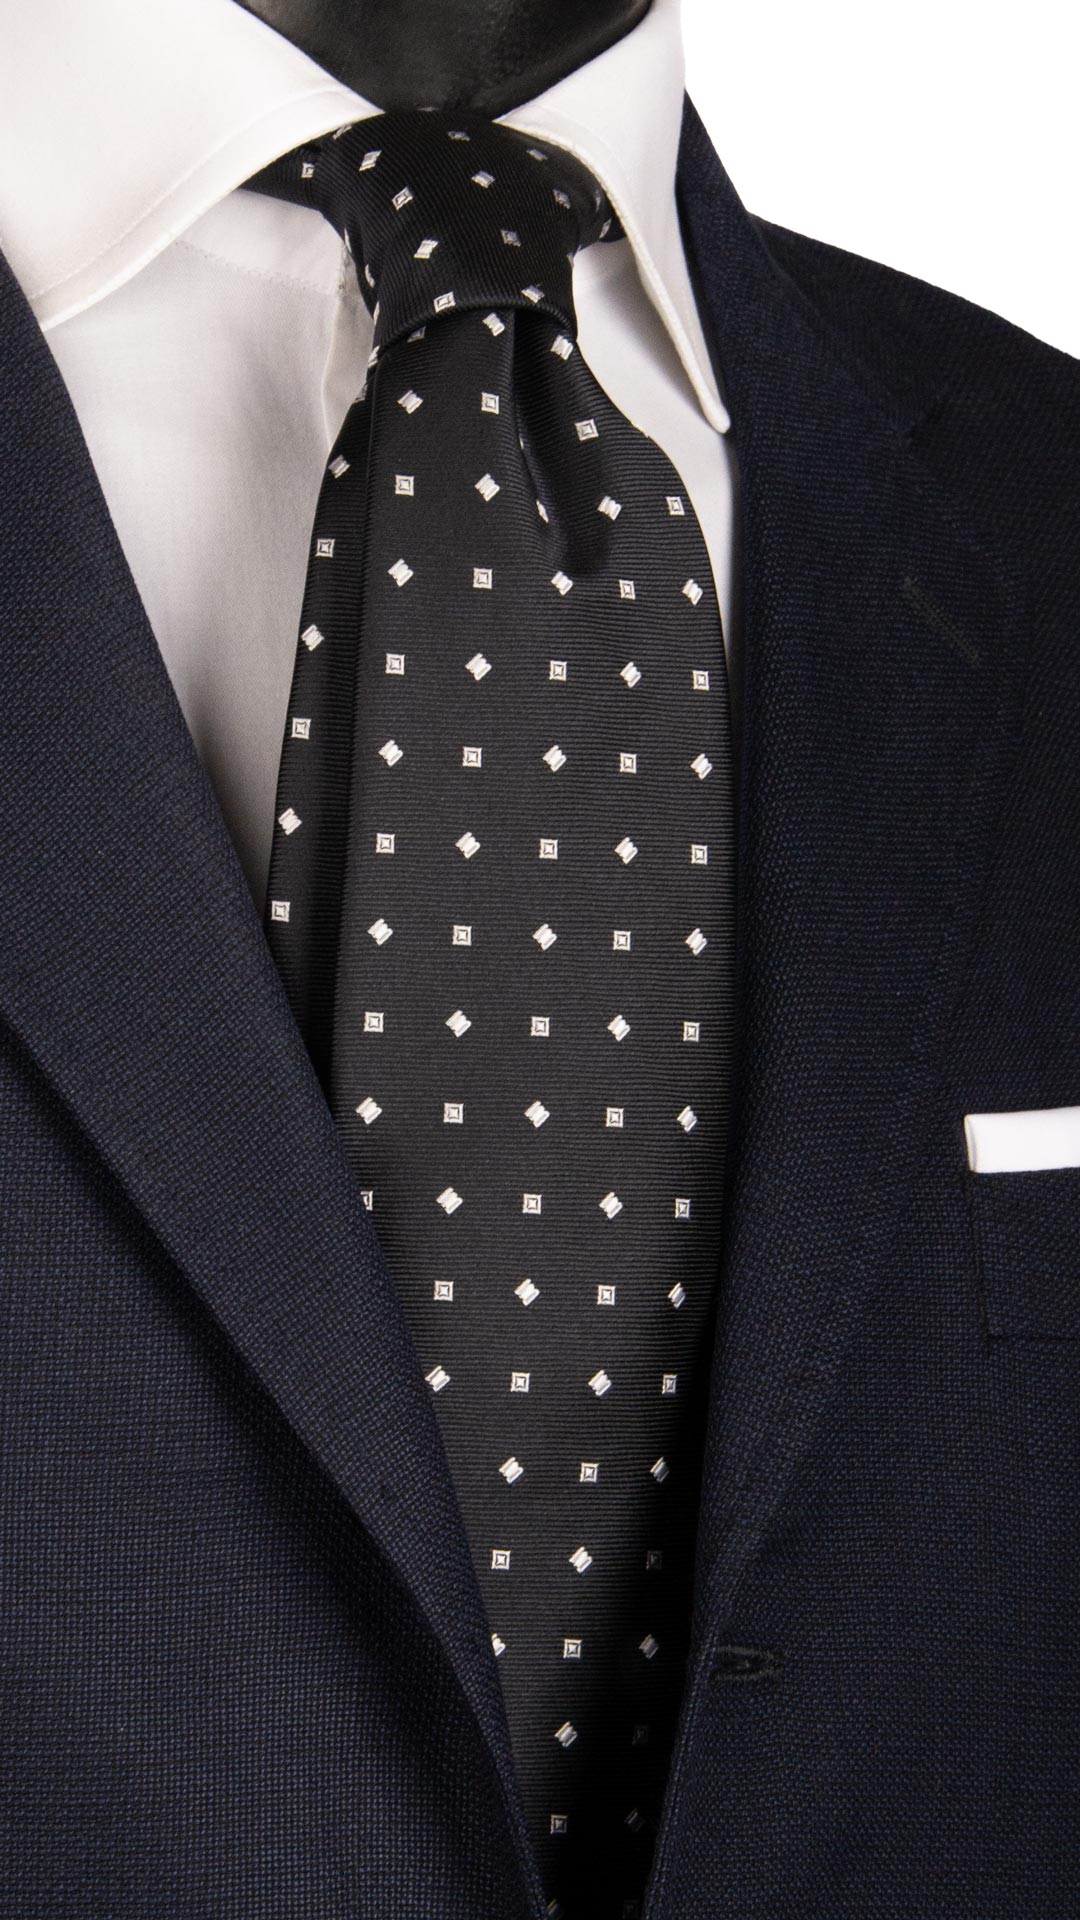 Cravatta da Cerimonia di Seta Blu Fantasia Grigia Argento Made in Italy Graffeo Cravatte